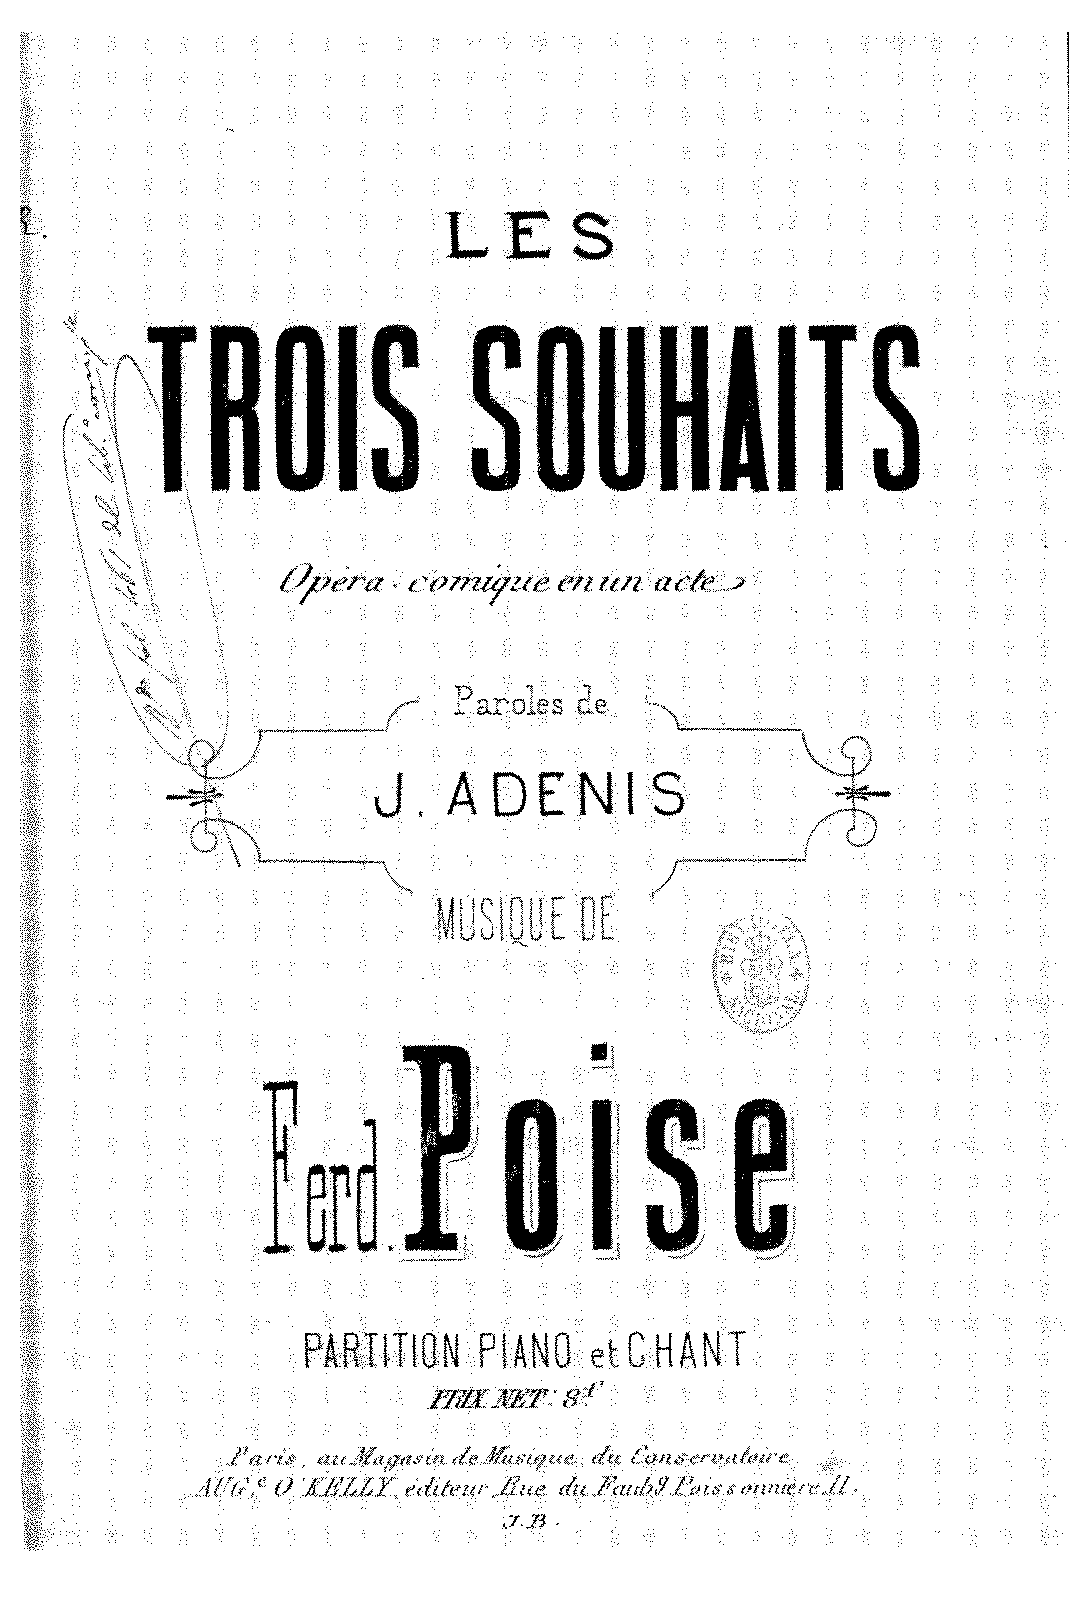 Les trois souhaits (Poise, Ferdinand) - IMSLP: Free Sheet Music PDF ...